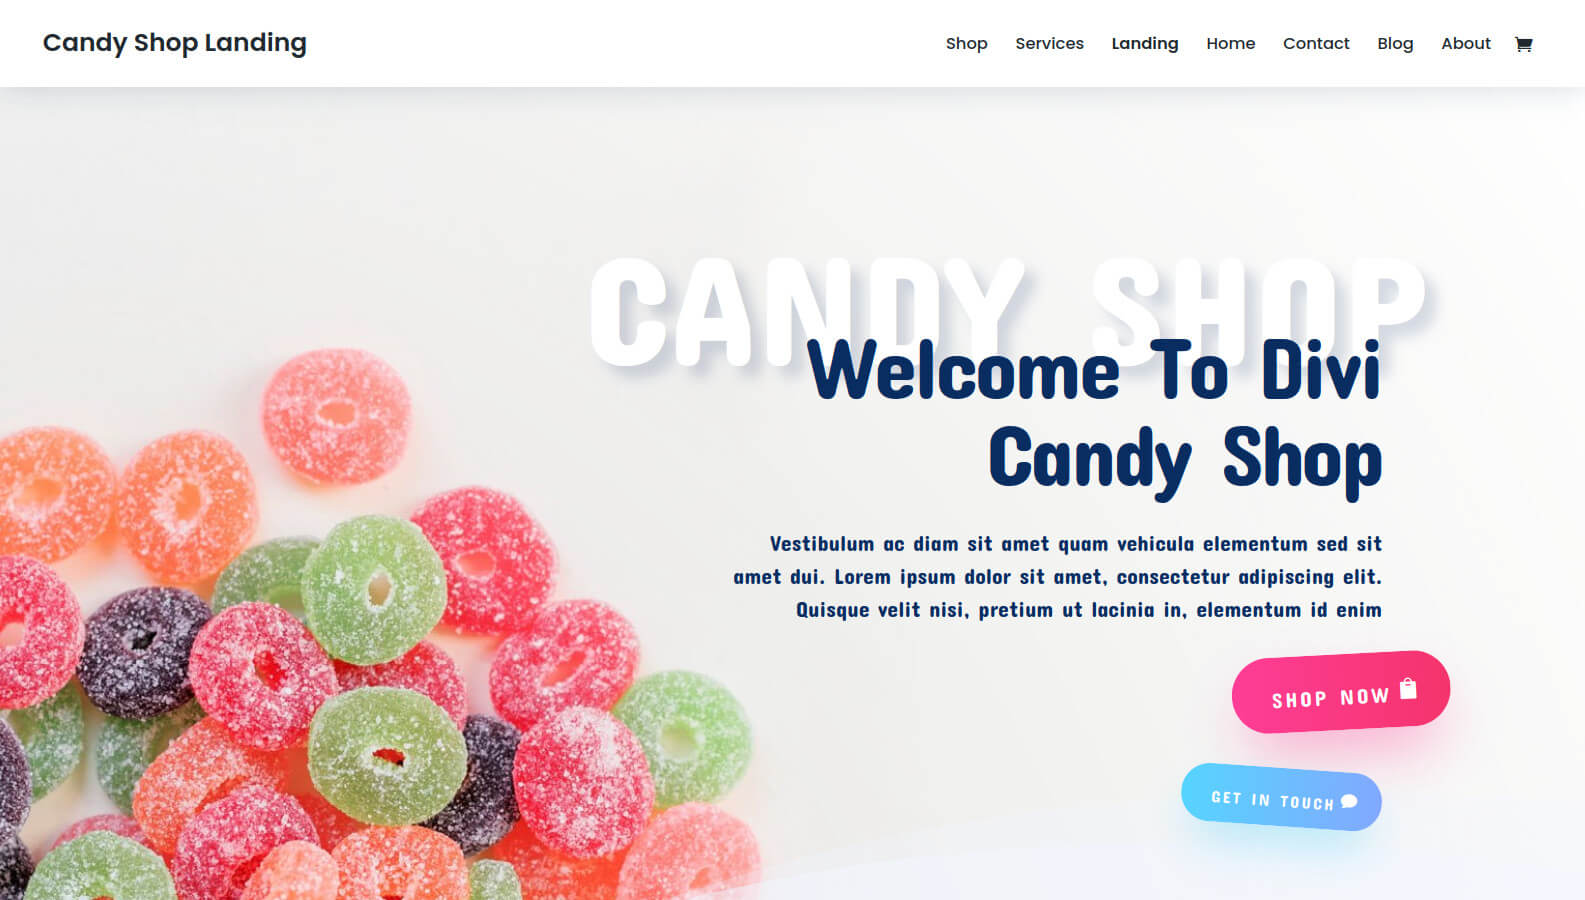 Candy shop website